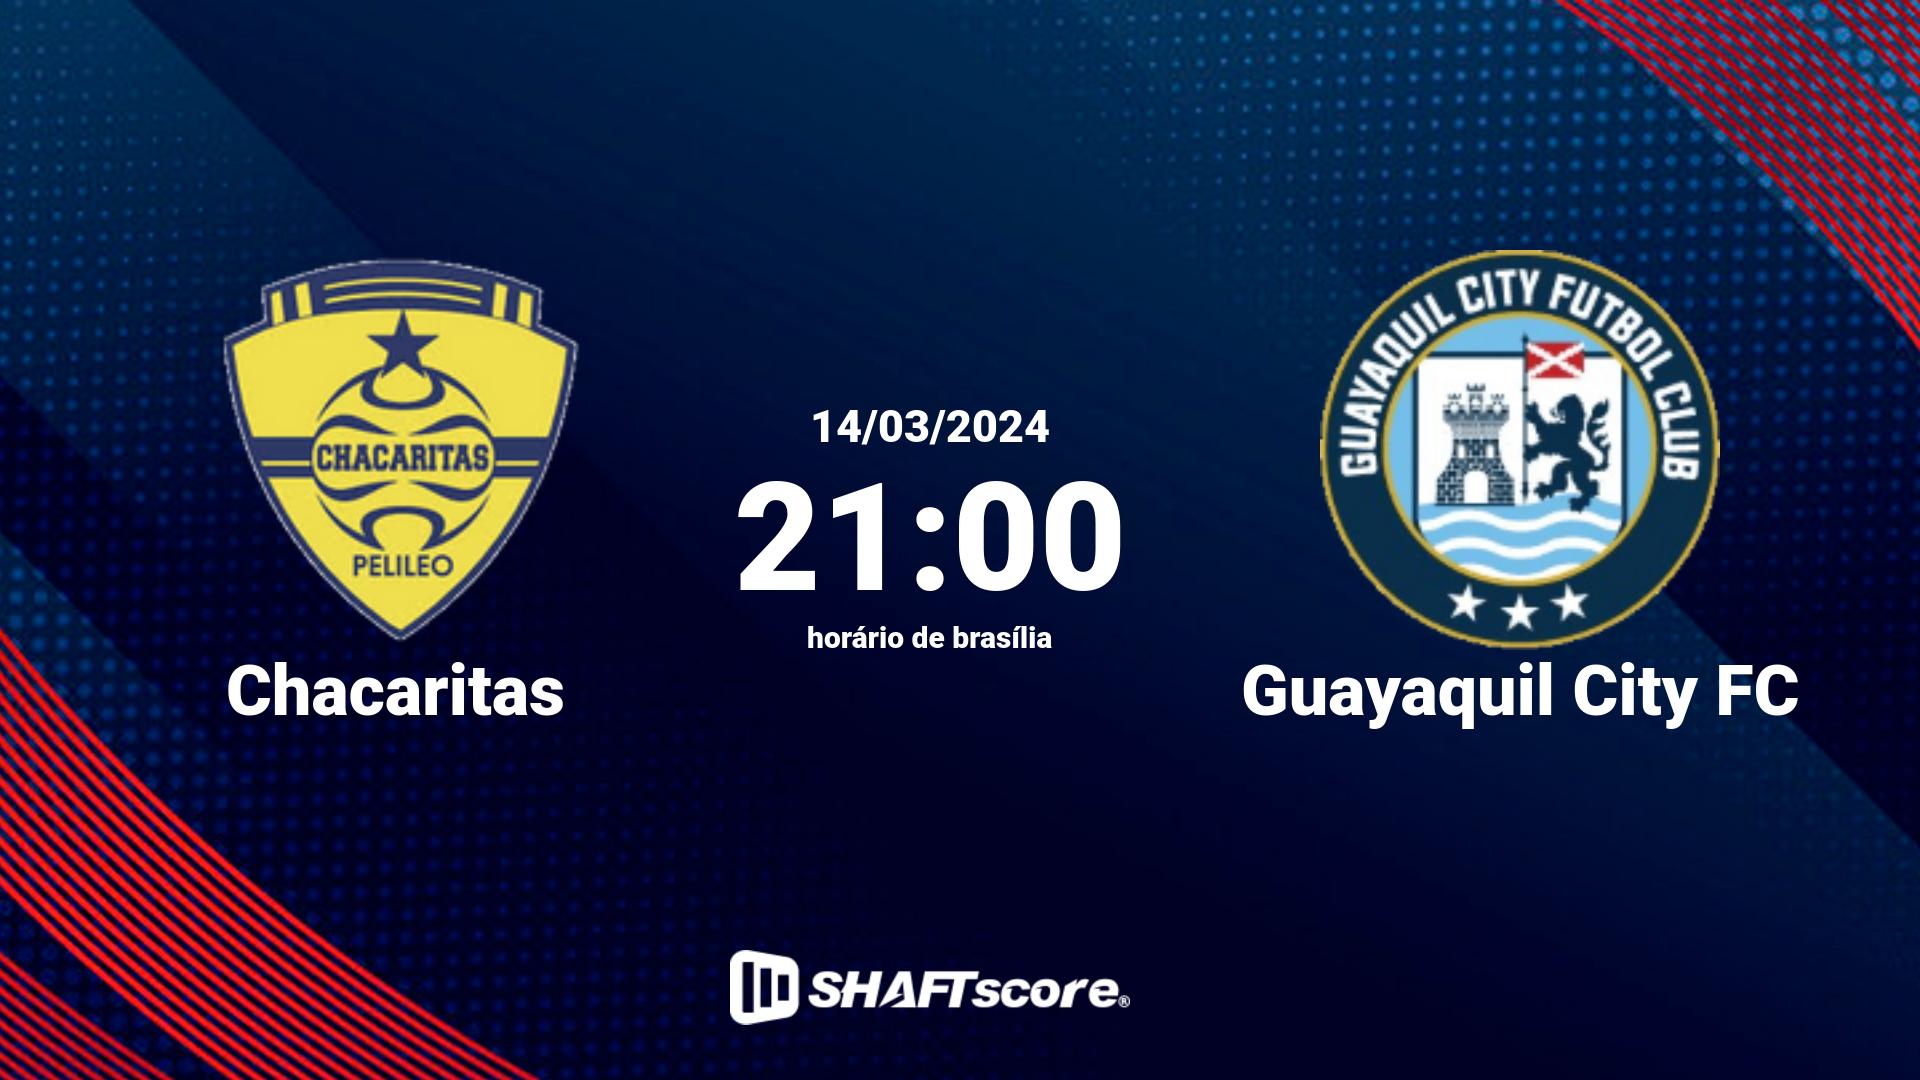 Estatísticas do jogo Chacaritas vs Guayaquil City FC 14.03 21:00